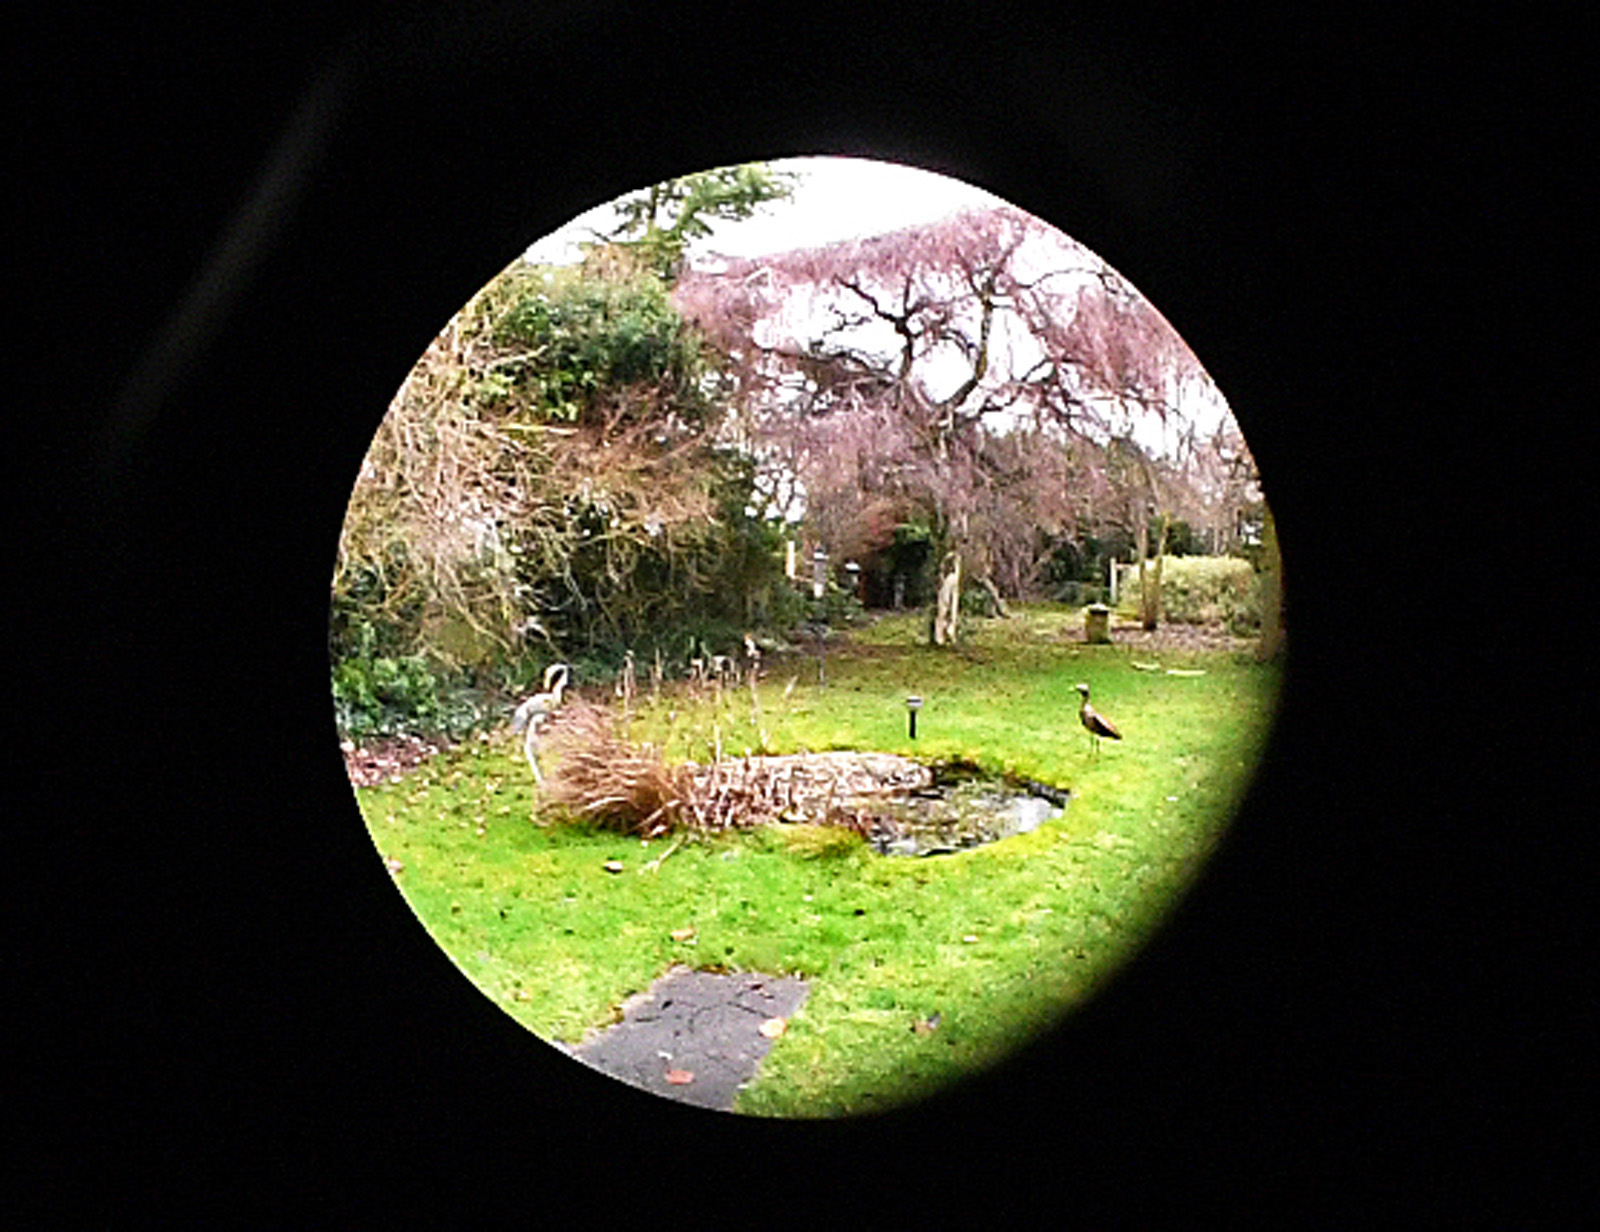 Through a reverse binocular lens, Malcolm Beetham